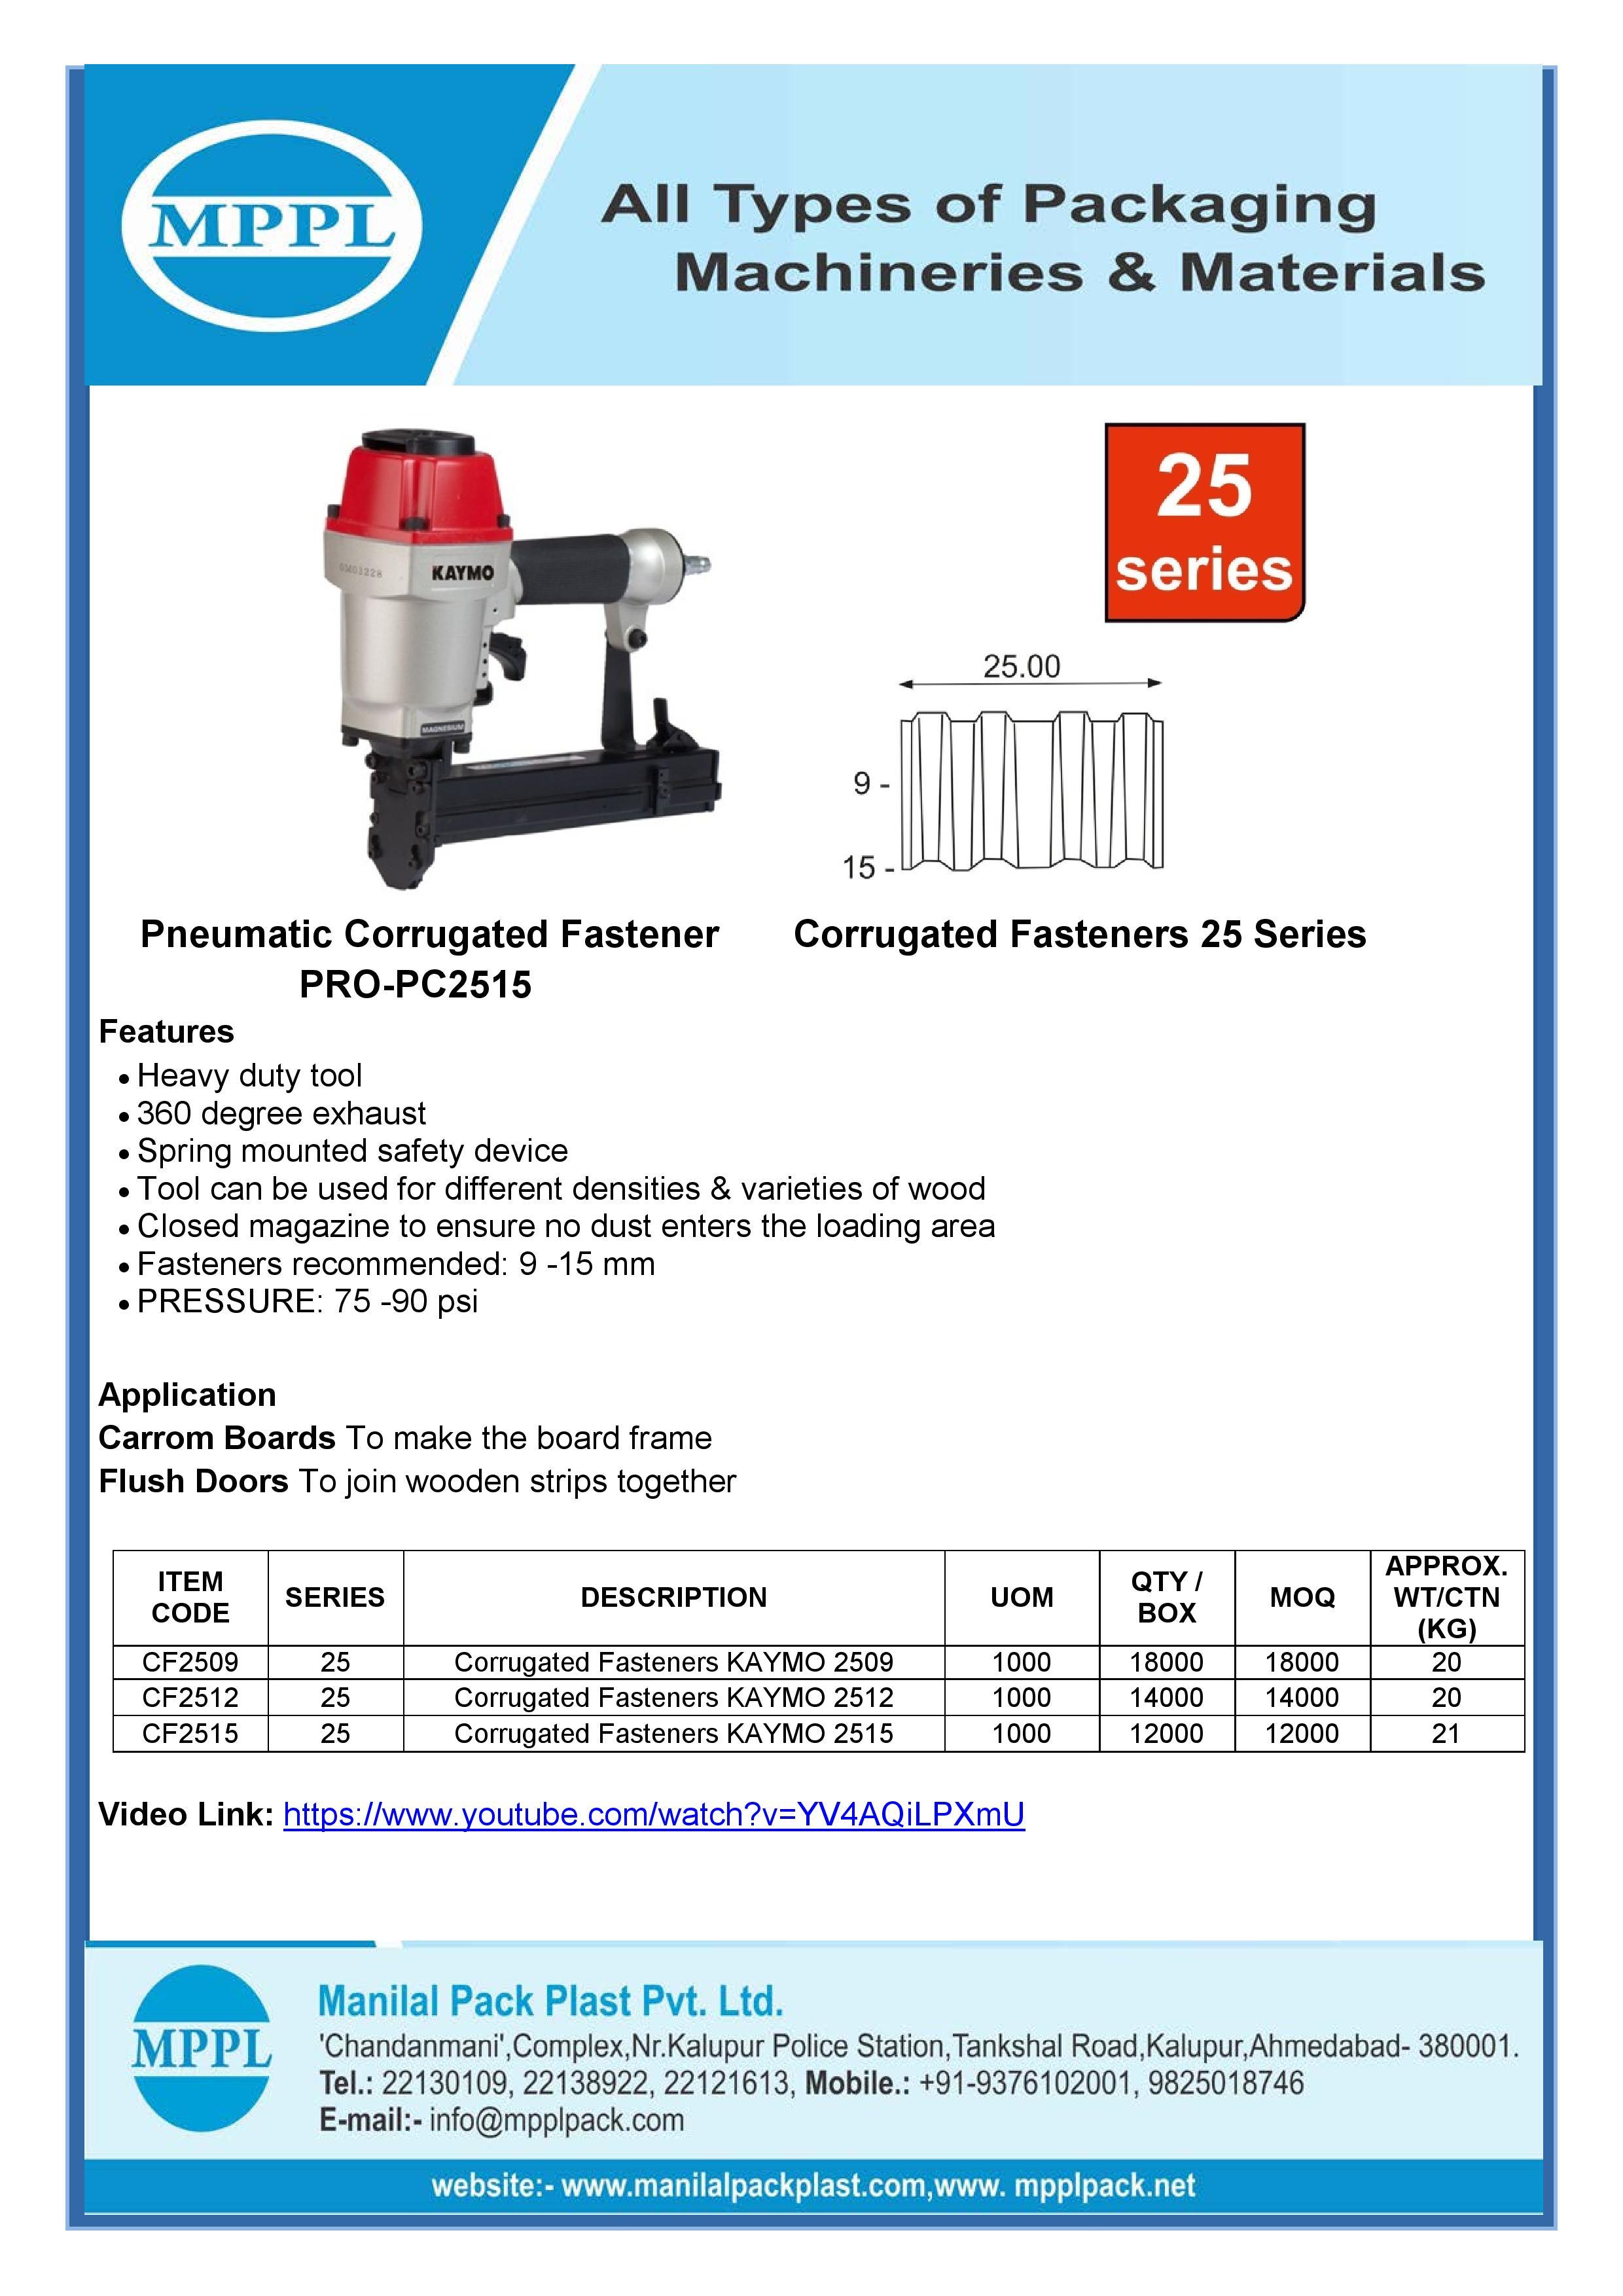 Pneumatic Corrugated Fastener PRO-PC2515